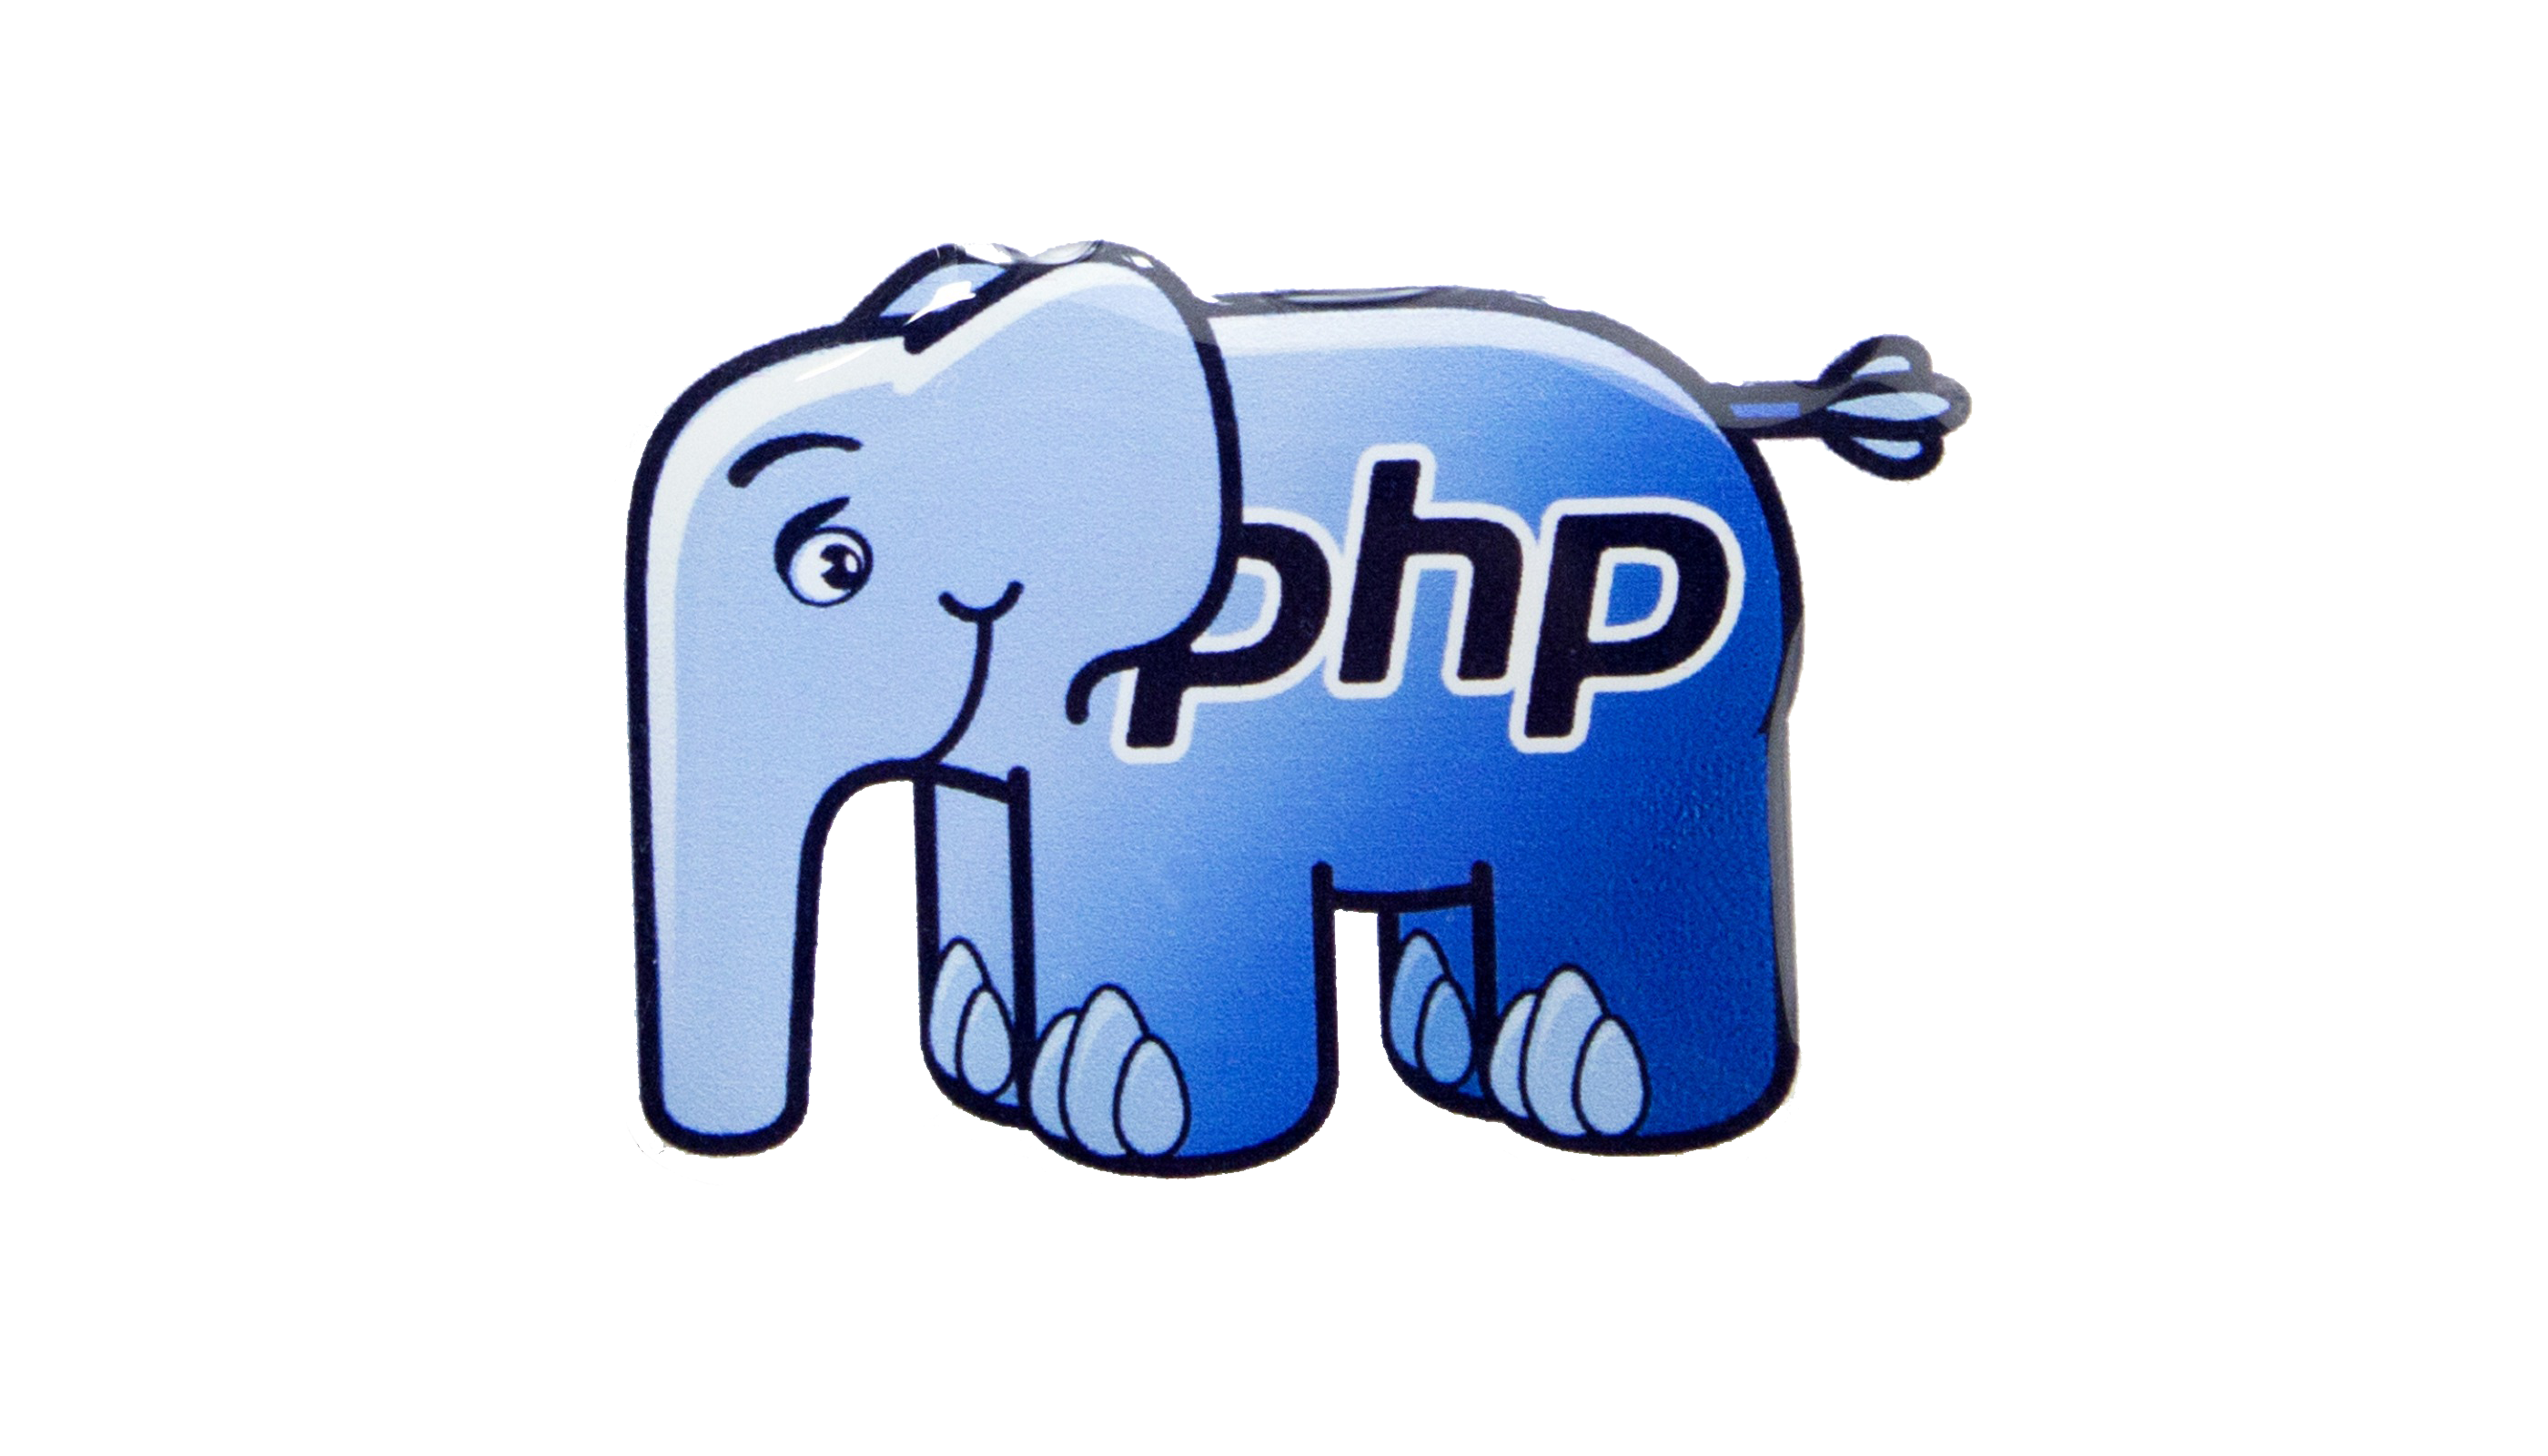 Https com l php u. Php Слоник. Php иконка. Php логотип. Php язык программирования.